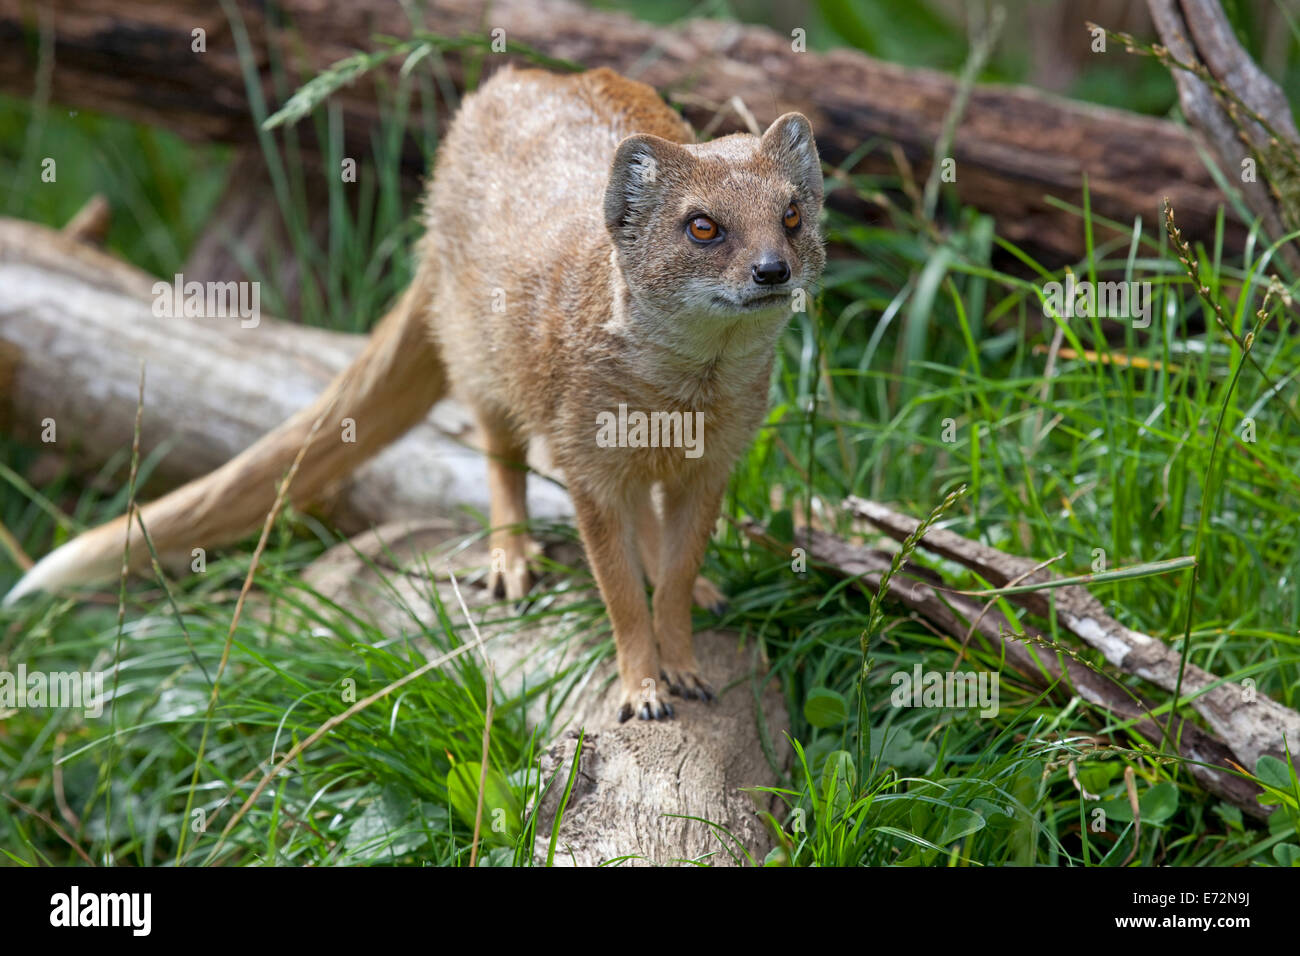 mongoose in captive wildlife park Stock Photo